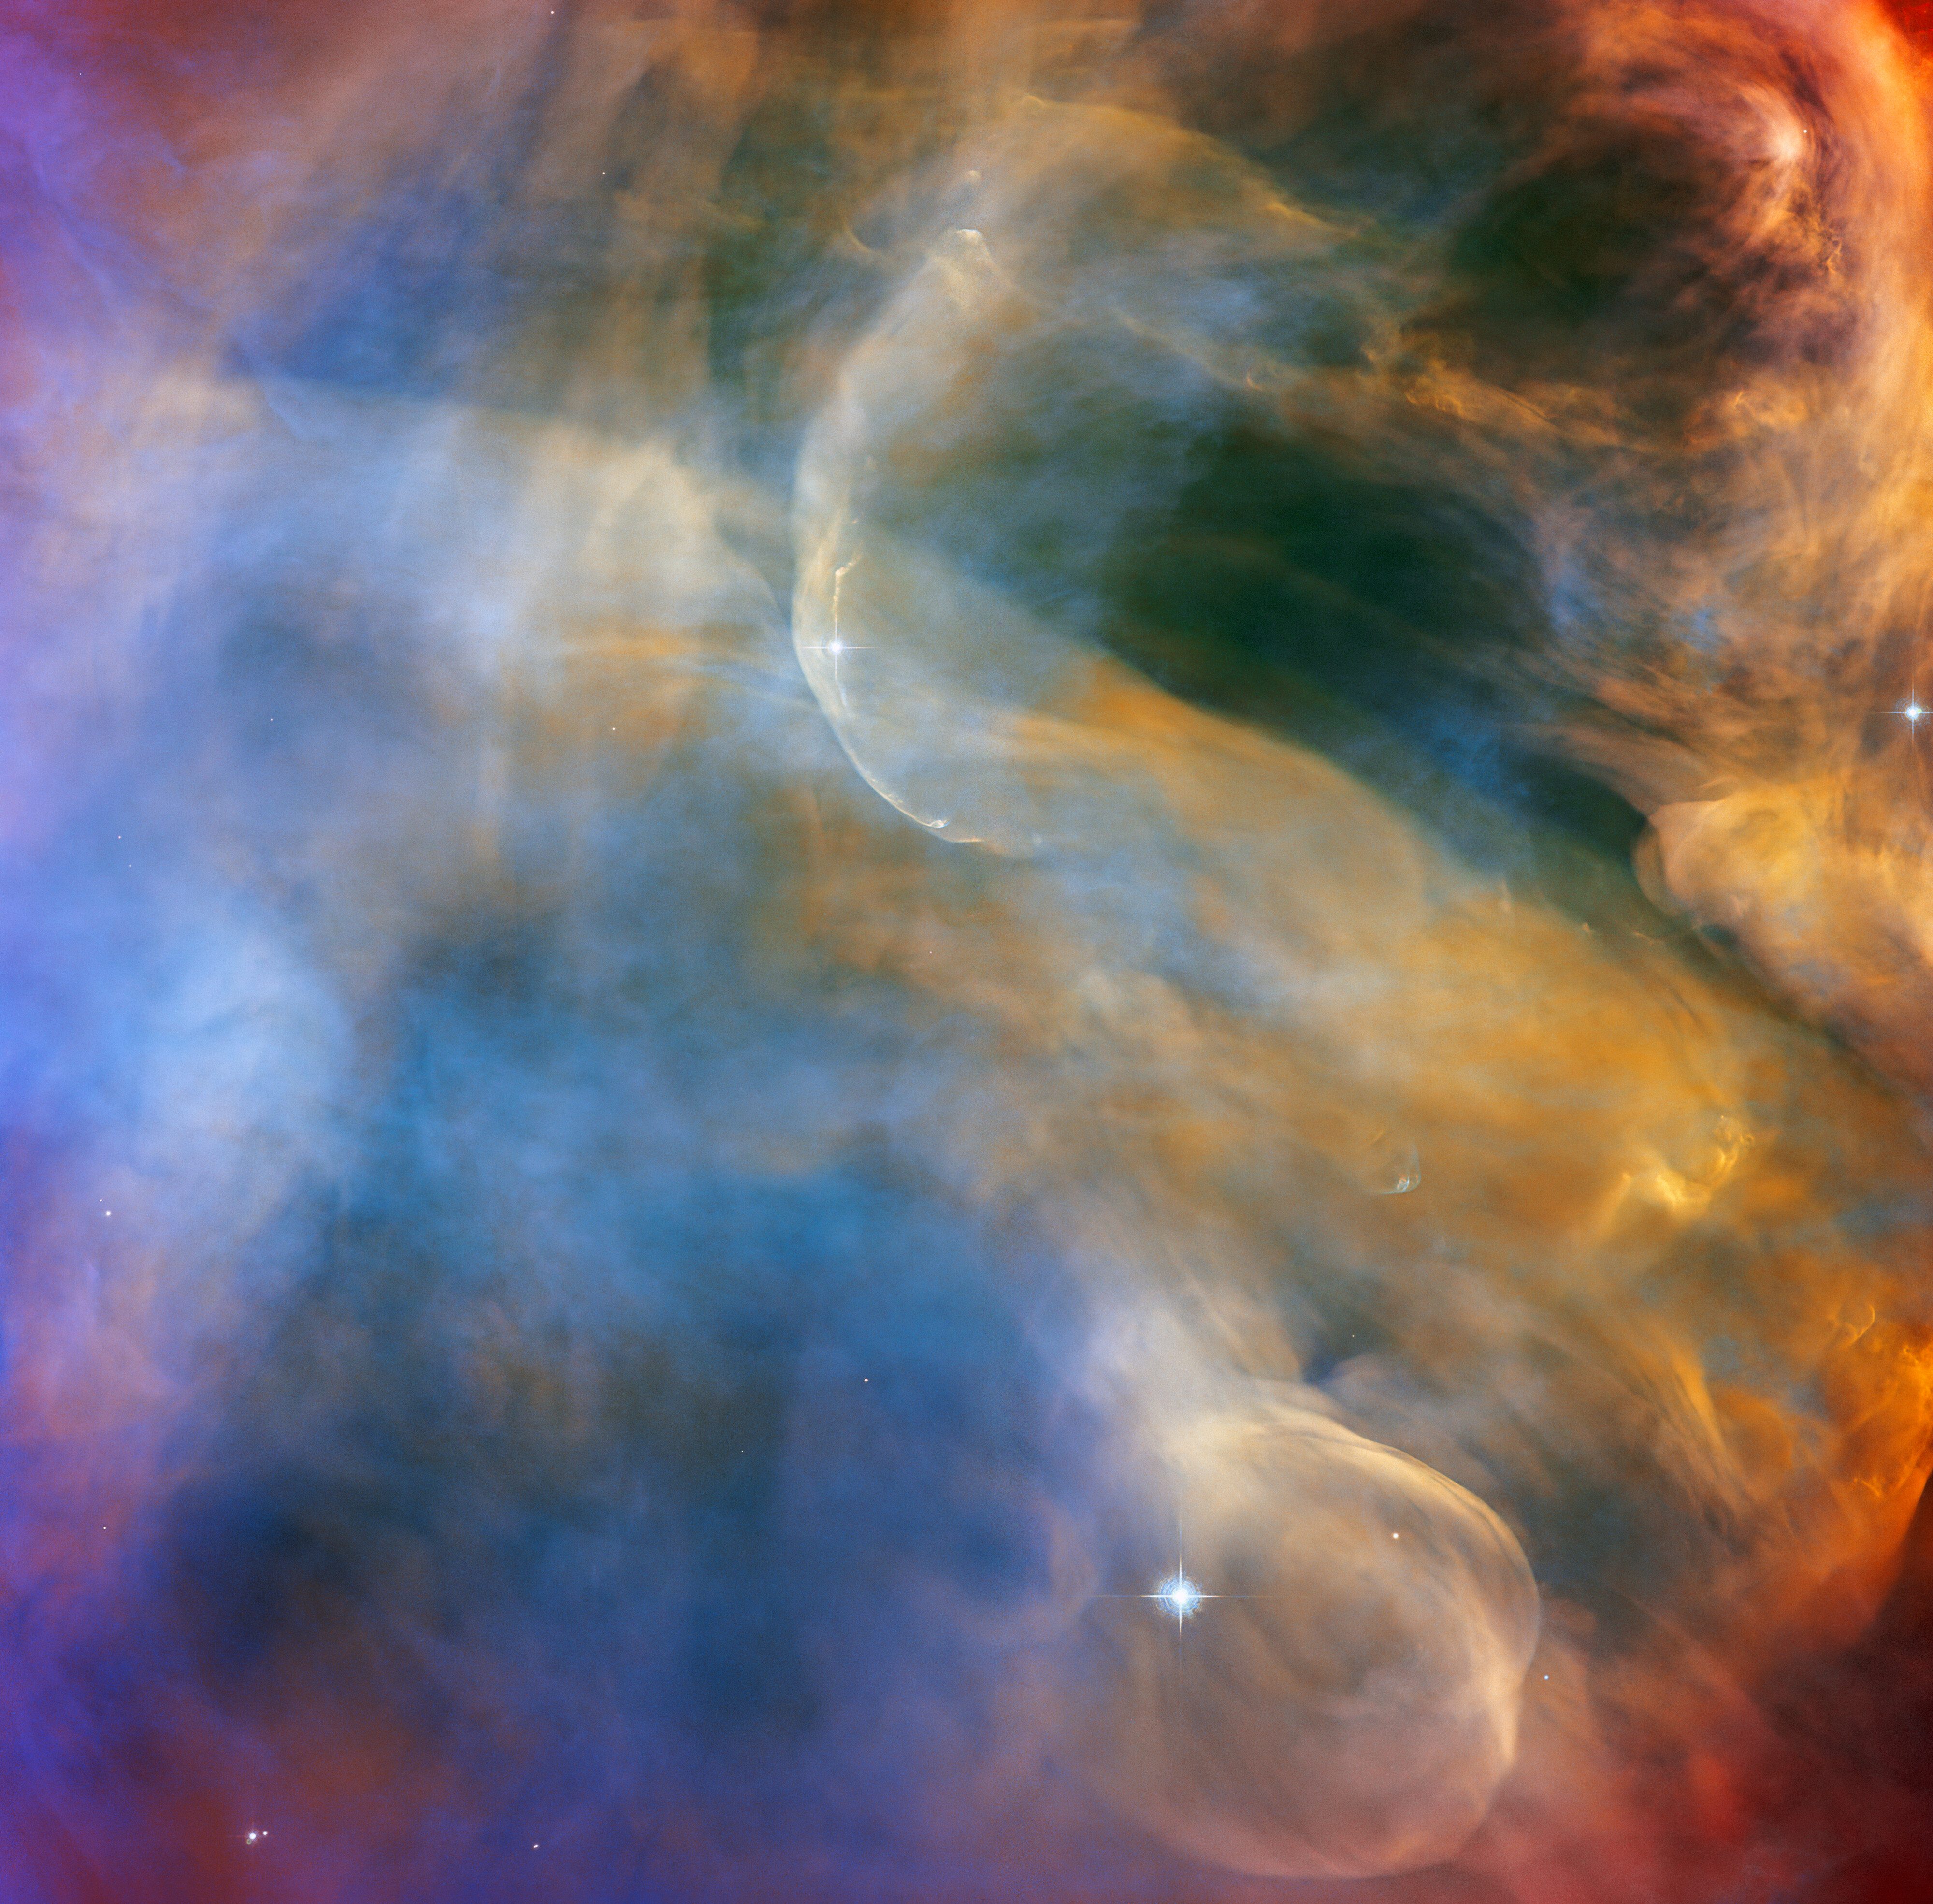 HH 505 in the Orion Nebula Seen by Hubble. Image Credit: ESA/Hubble & NASA, J. Bally Acknowledgement: M. H. Özsaraç